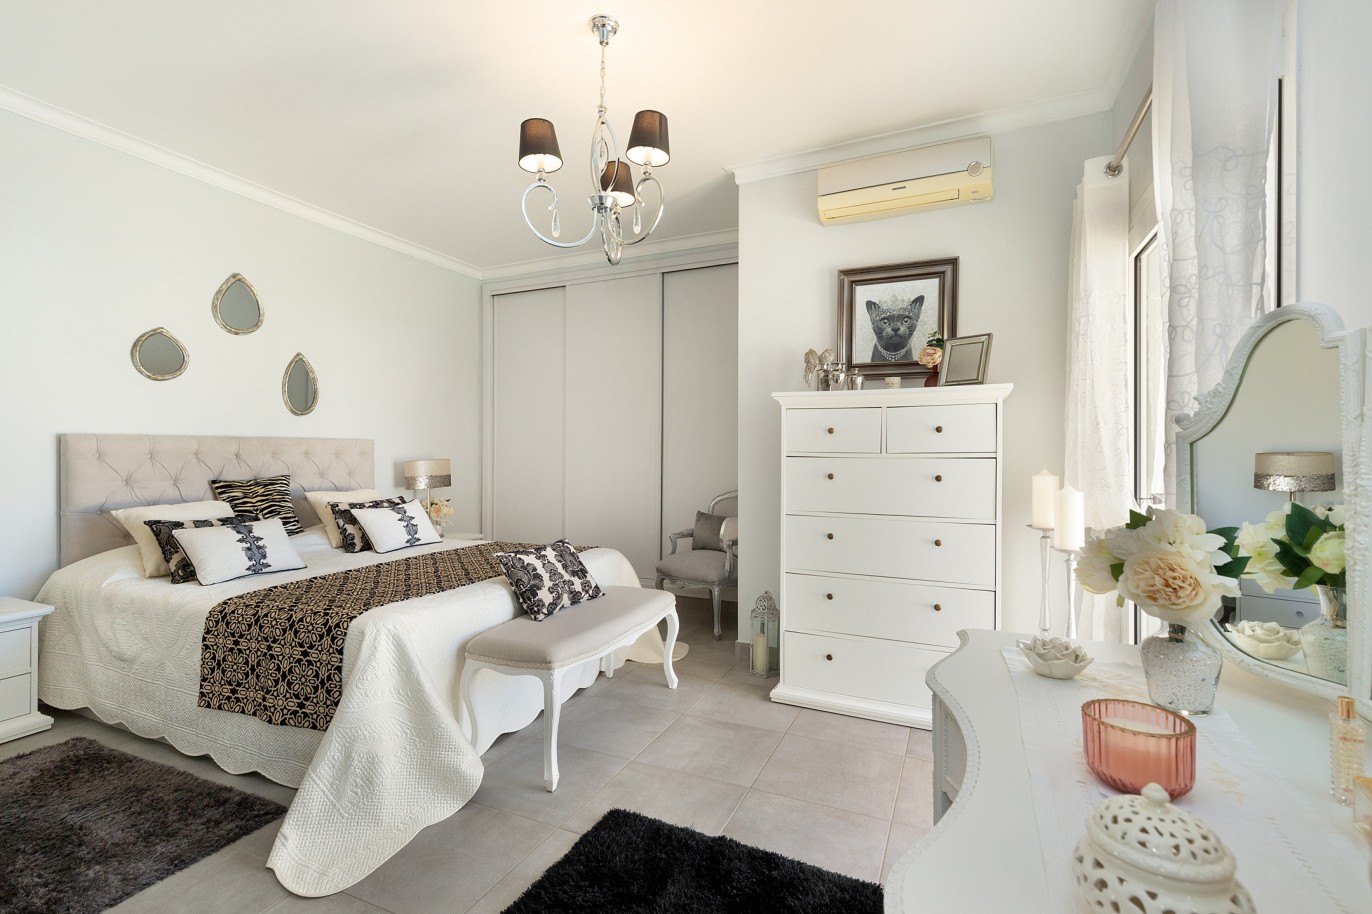 Fantastic 3 bedroom villa with pool, for sale in Algoz, Algarve_215664